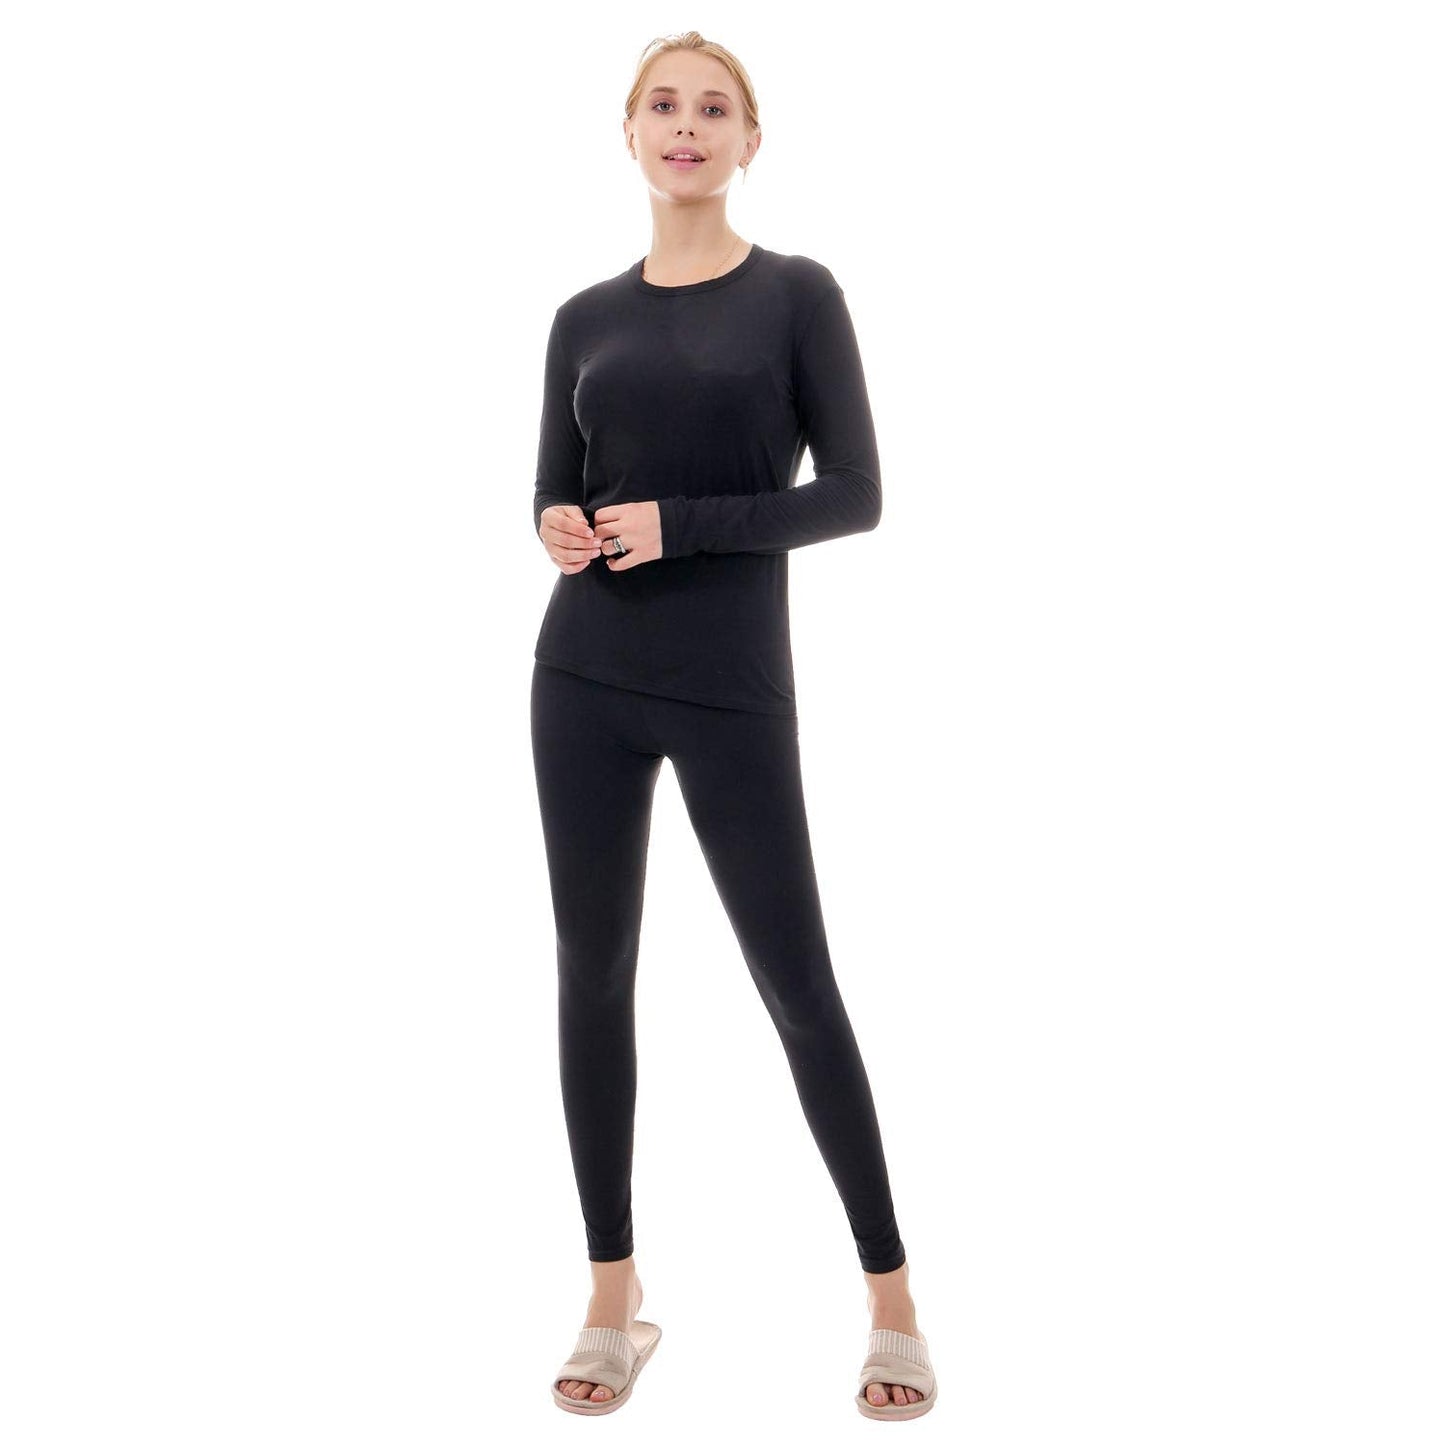 Women Stretch Thermal Underwear Set Soft Long Johns Tops & Bottoms LANBAOSI